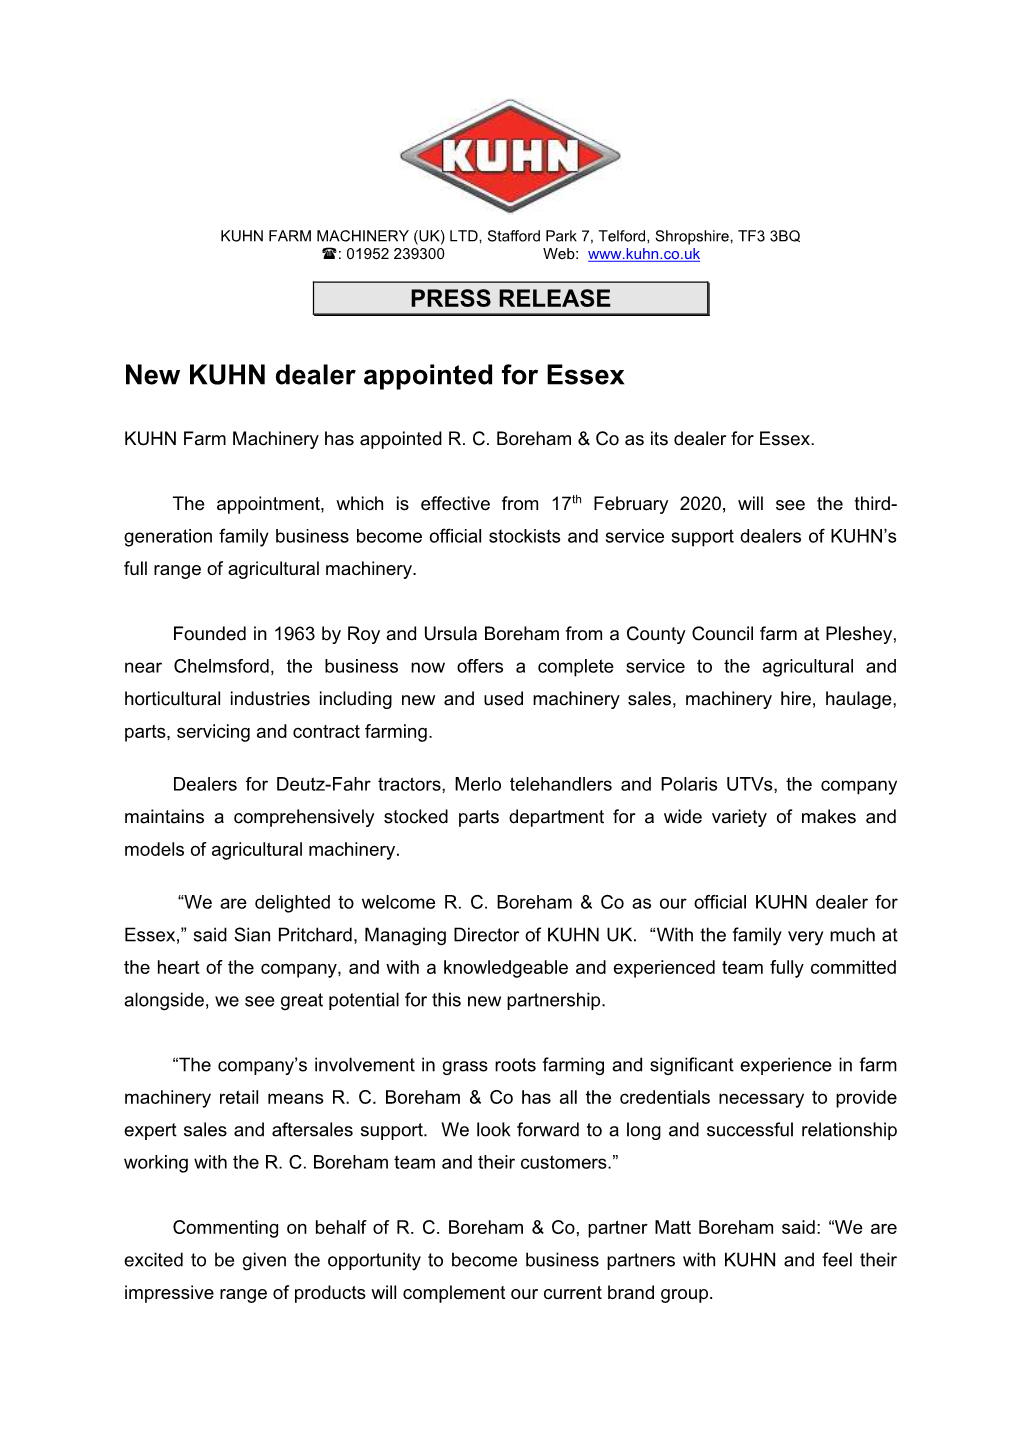 New KUHN Dealer Appointed for Essex